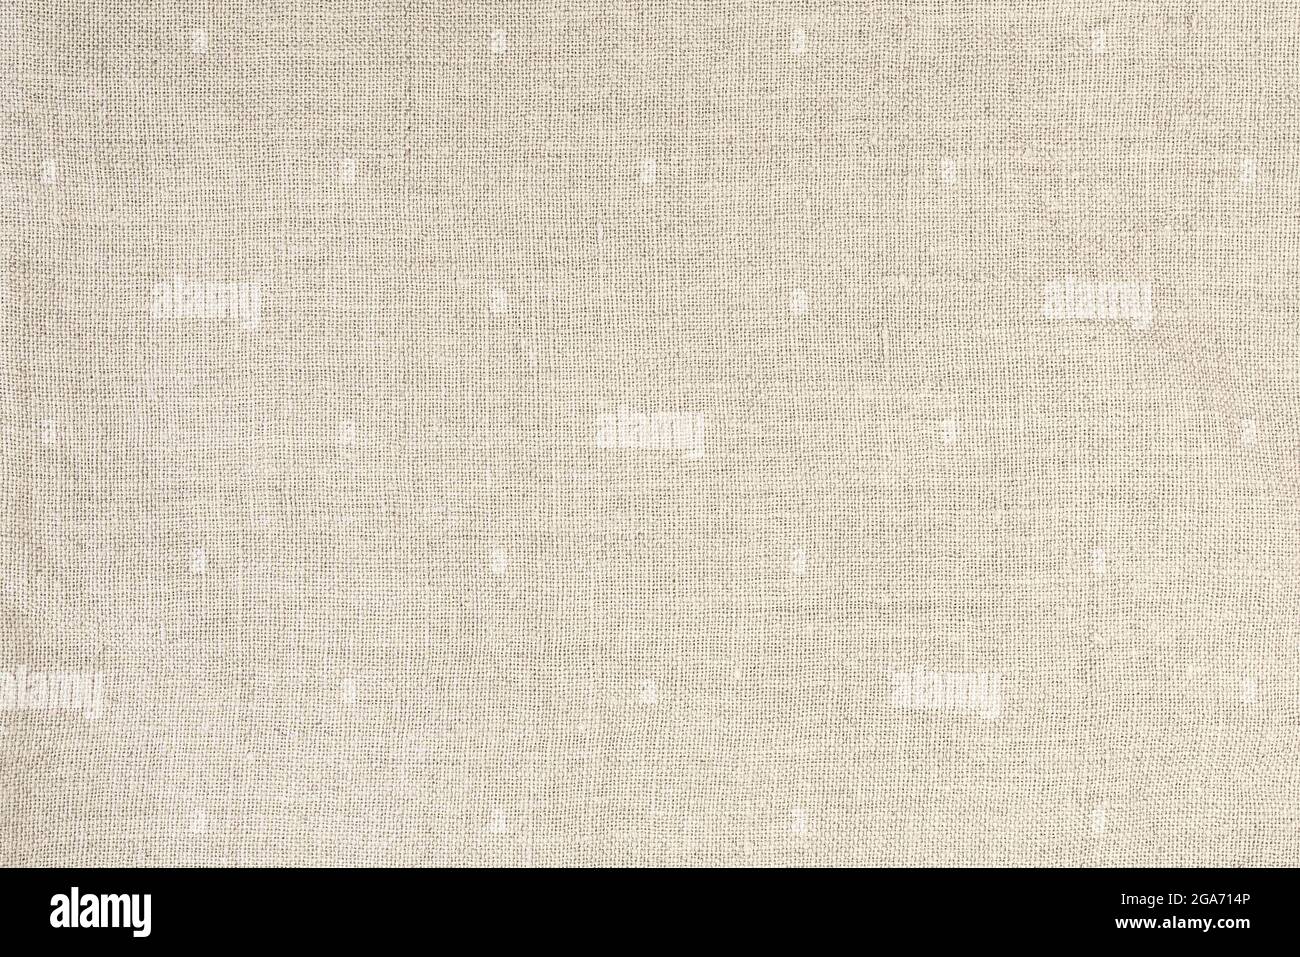 rough linen textile texture, abstract canvas background Stock Photo